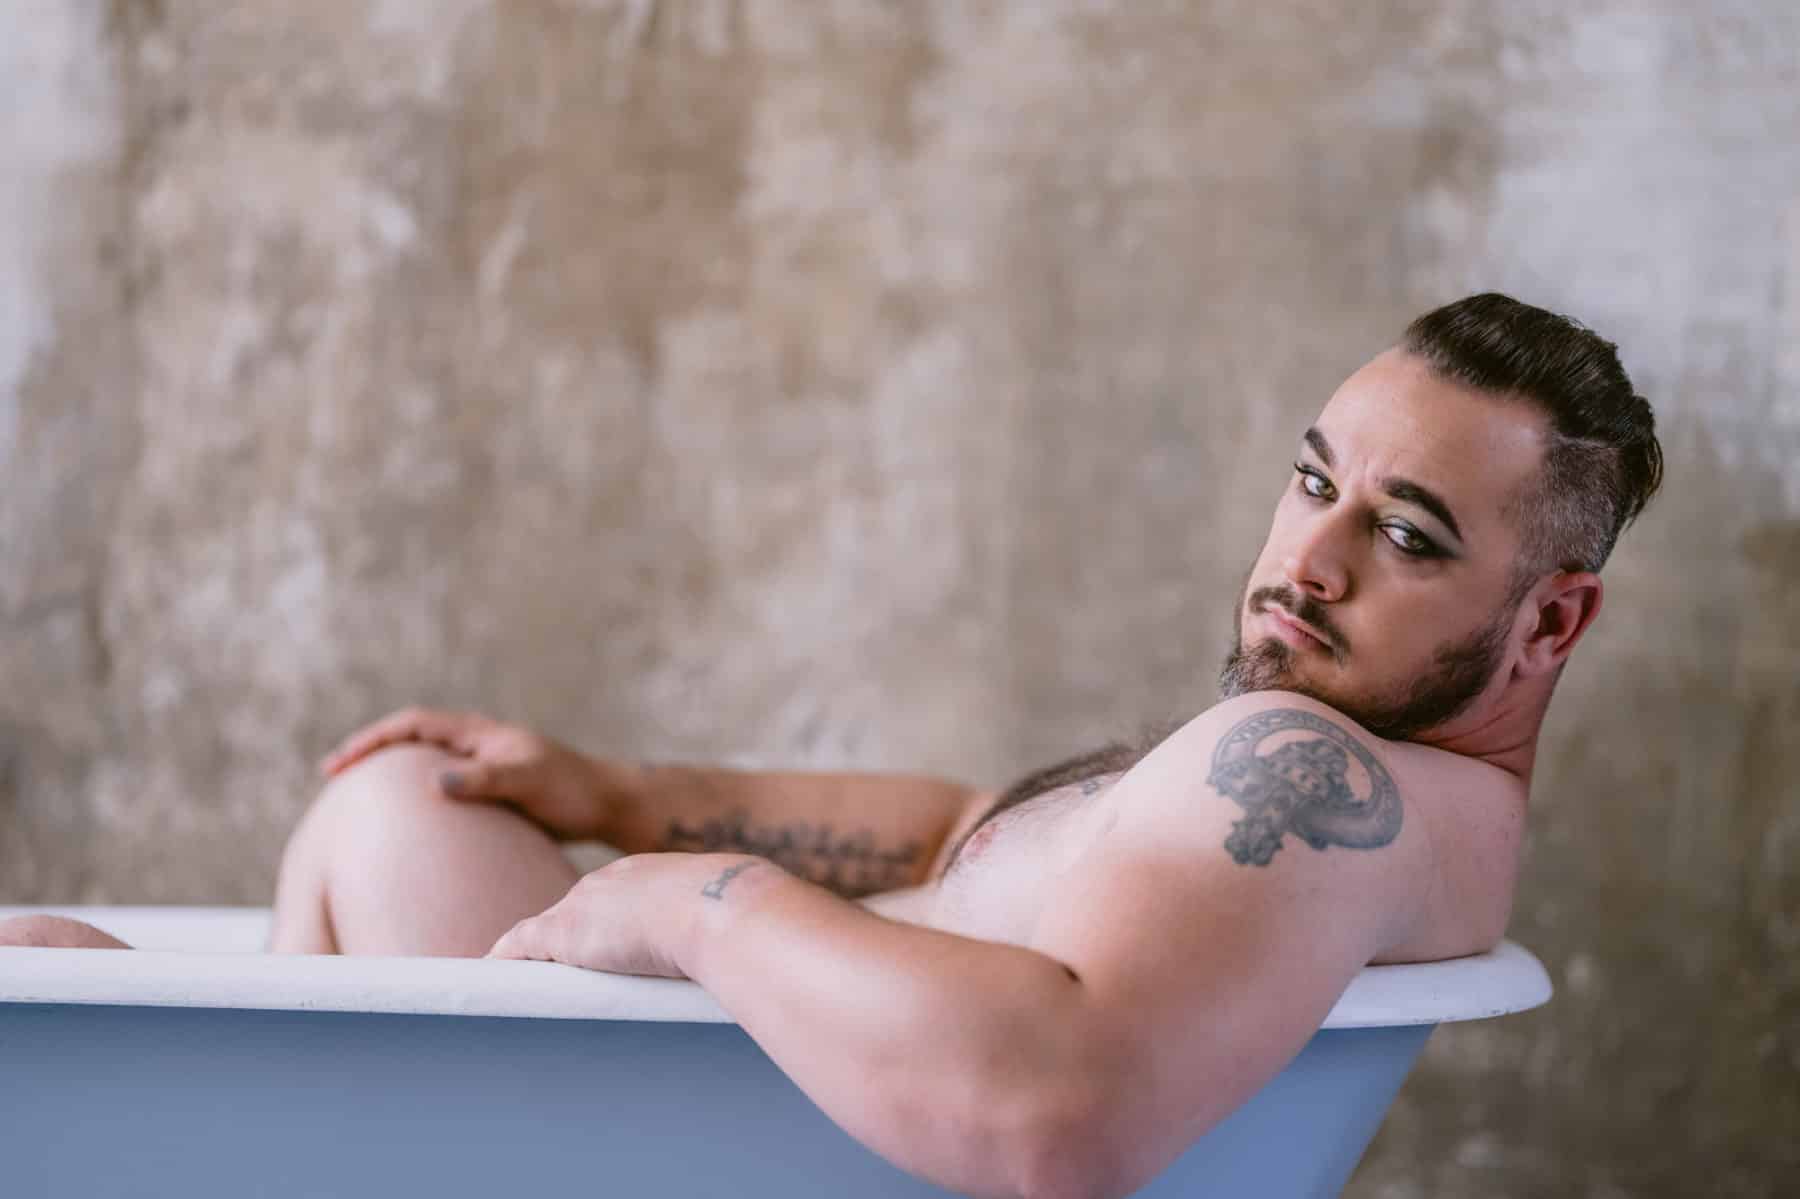 Nude male boudoir photo in tub